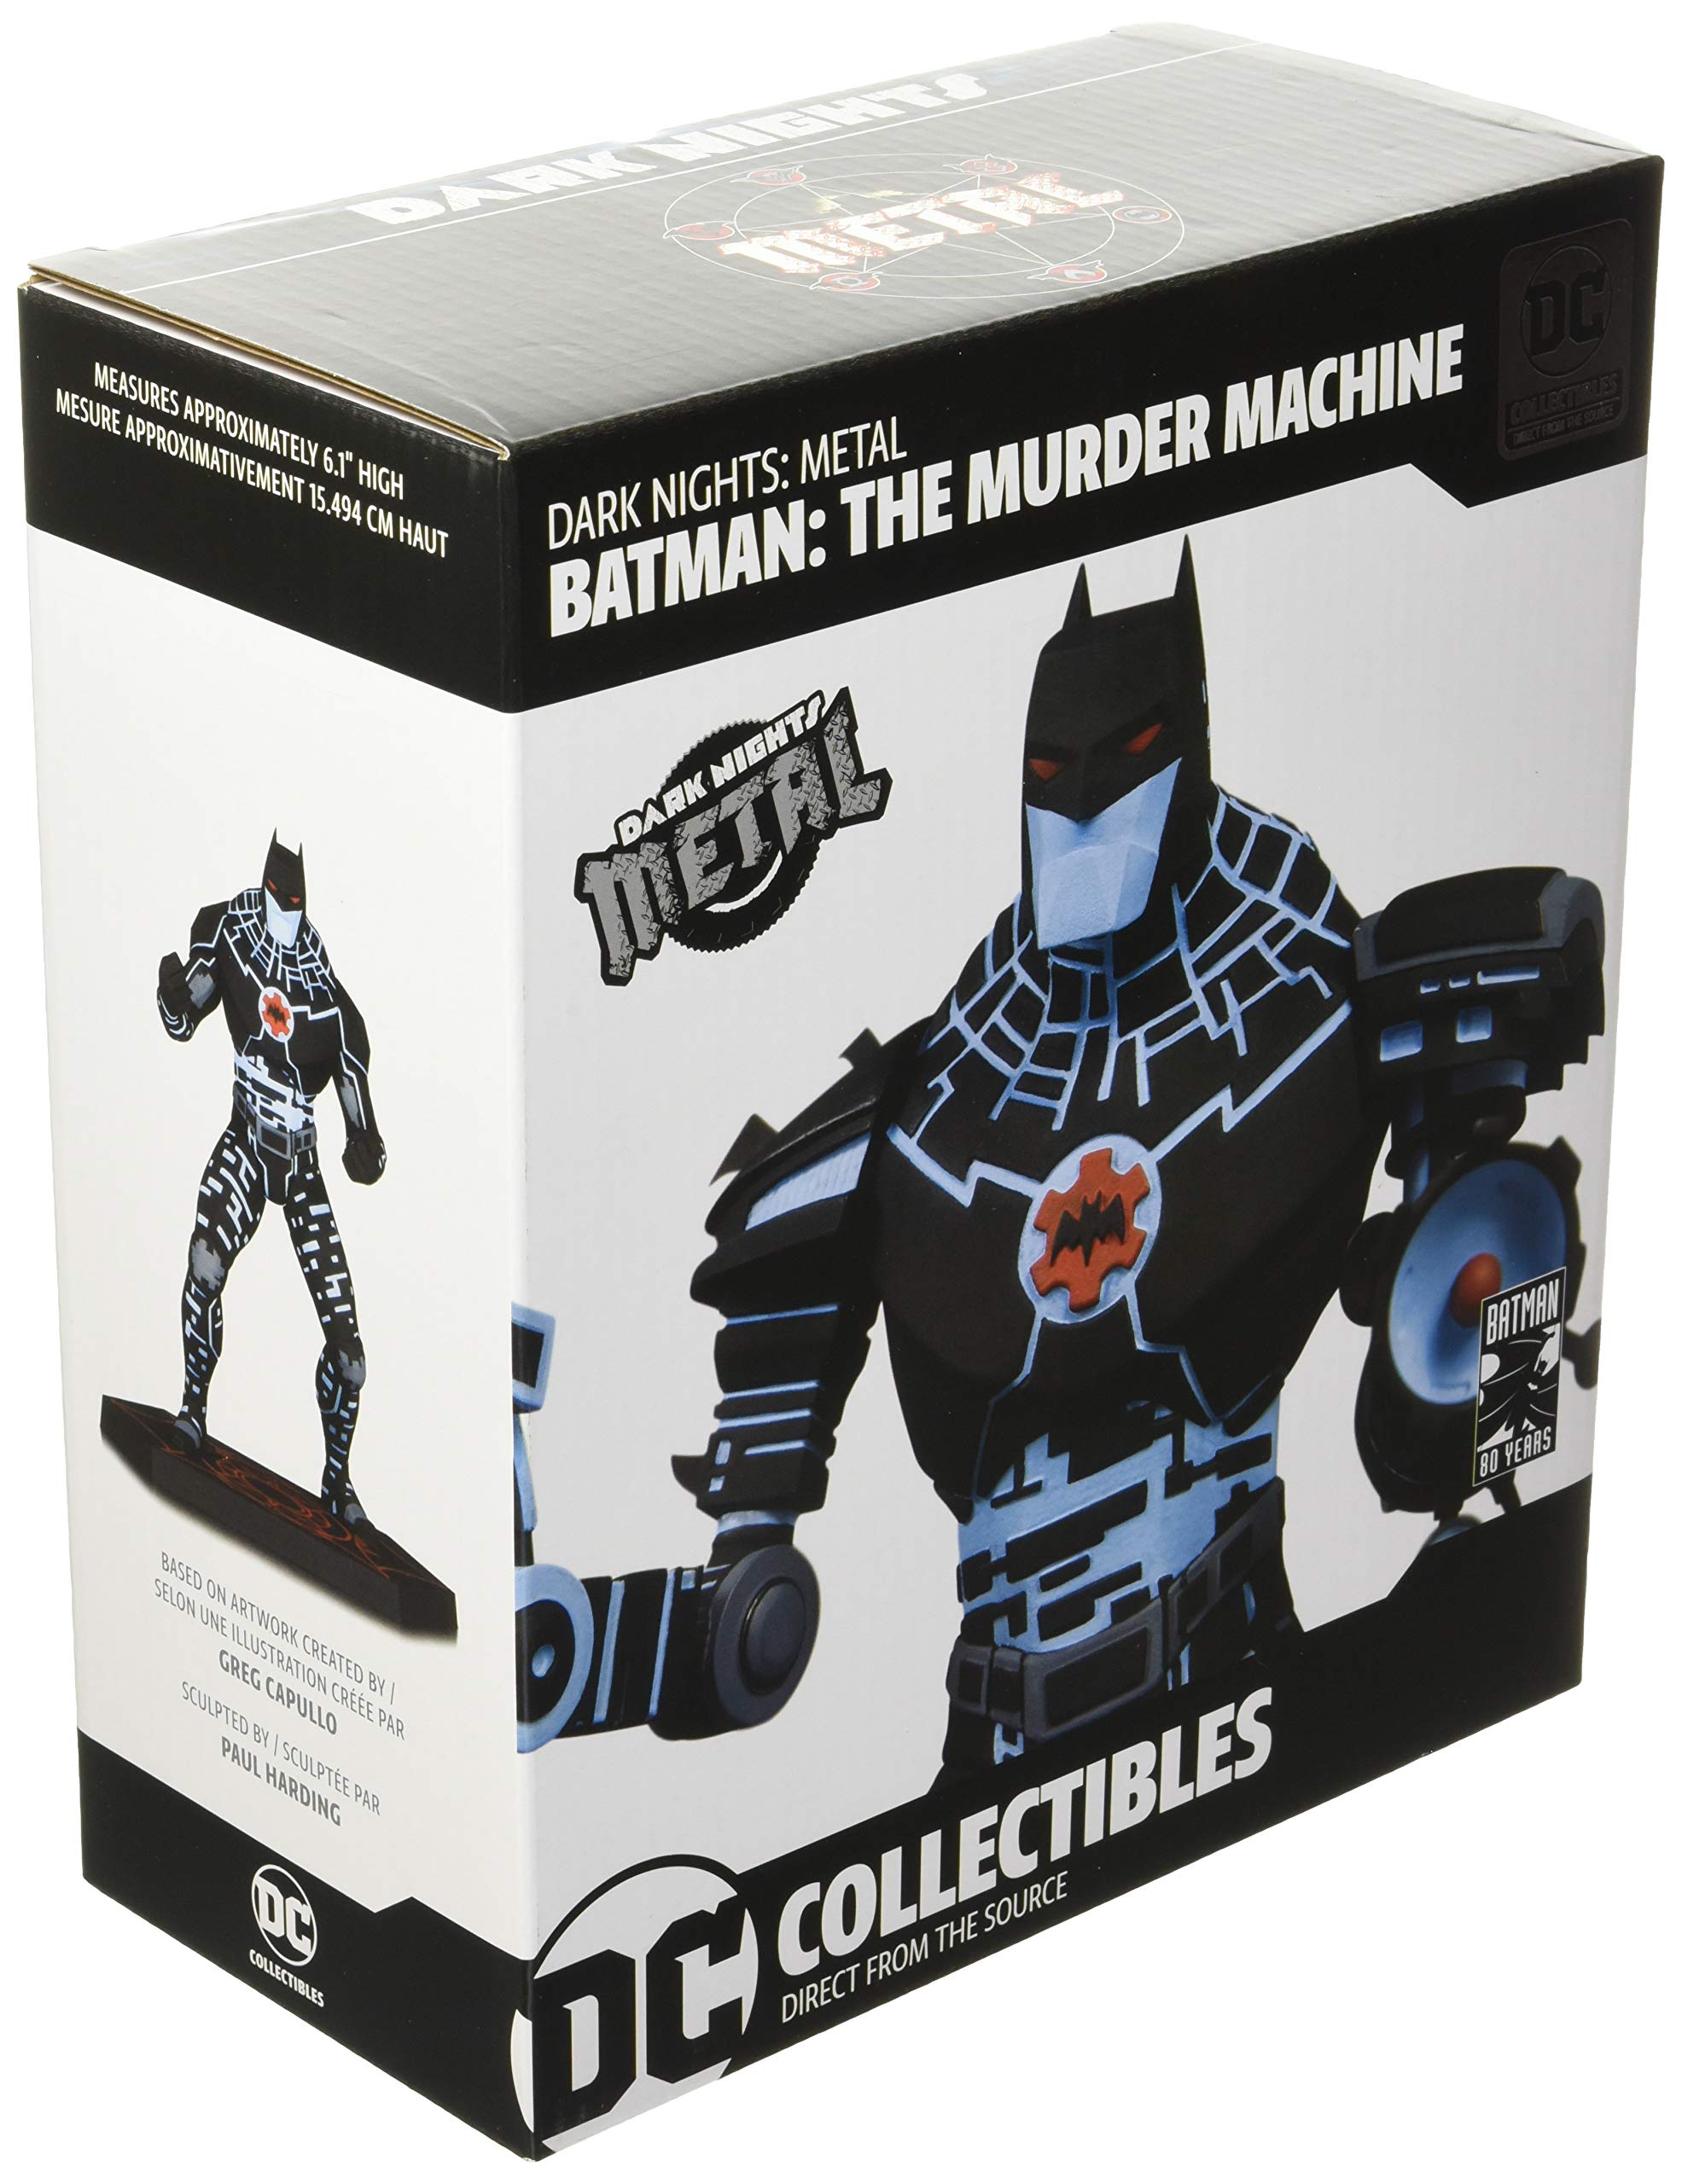 Mua DC Collectibles Dark Nights Metal: Batman The Murder Machine Statue  trên Amazon Mỹ chính hãng 2023 | Giaonhan247